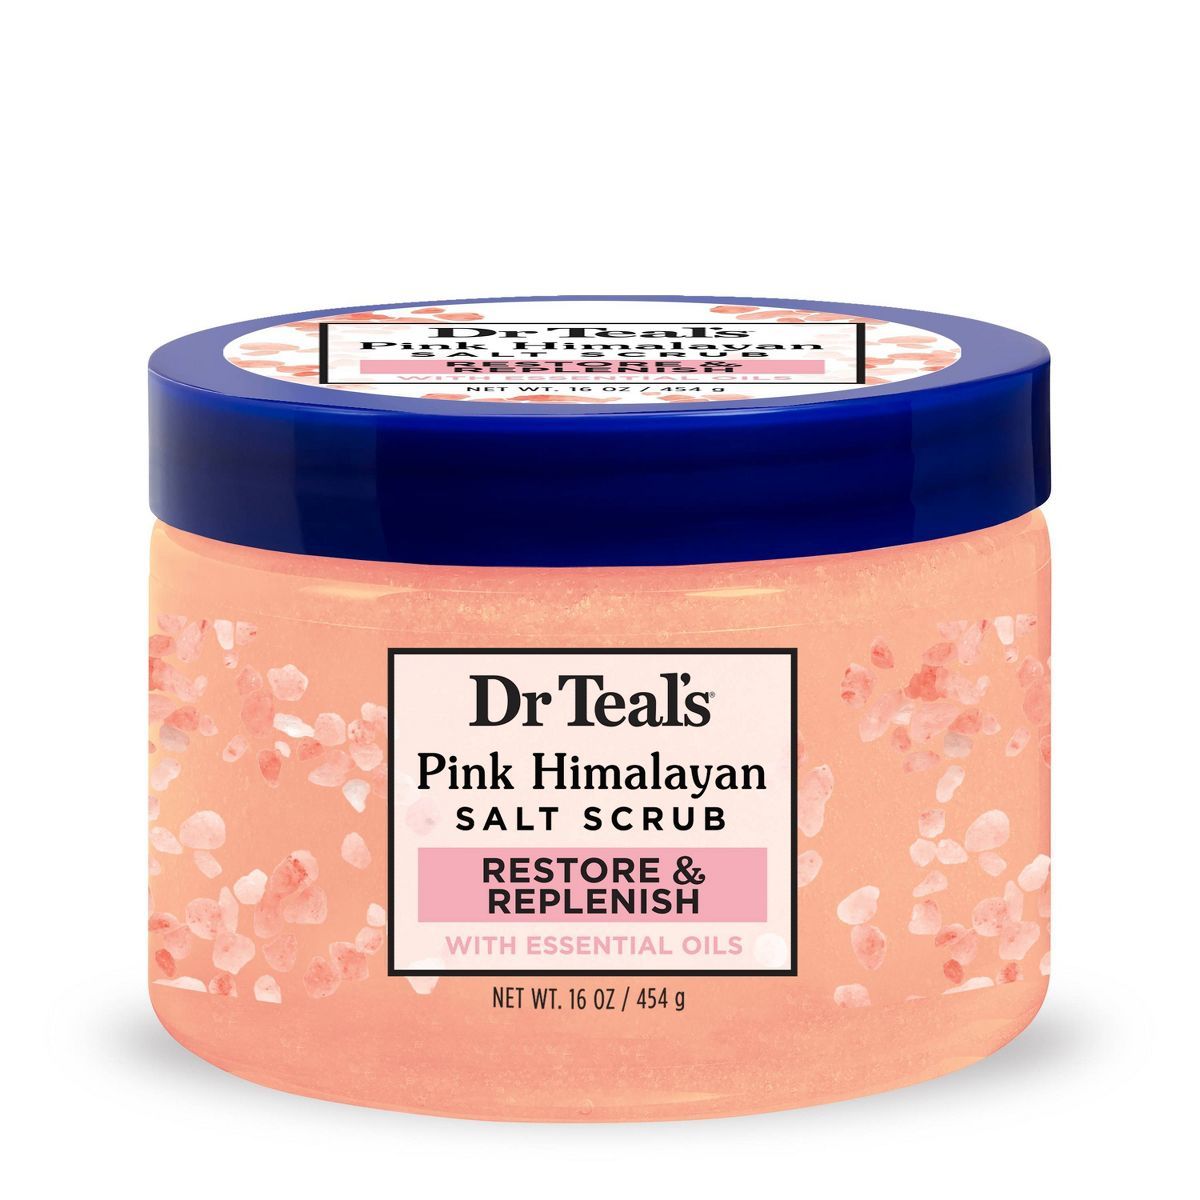 Dr Teal's Restore & Replenish Orange Scented Pink Himalayan Sea Salt Scrub - 16oz | Target